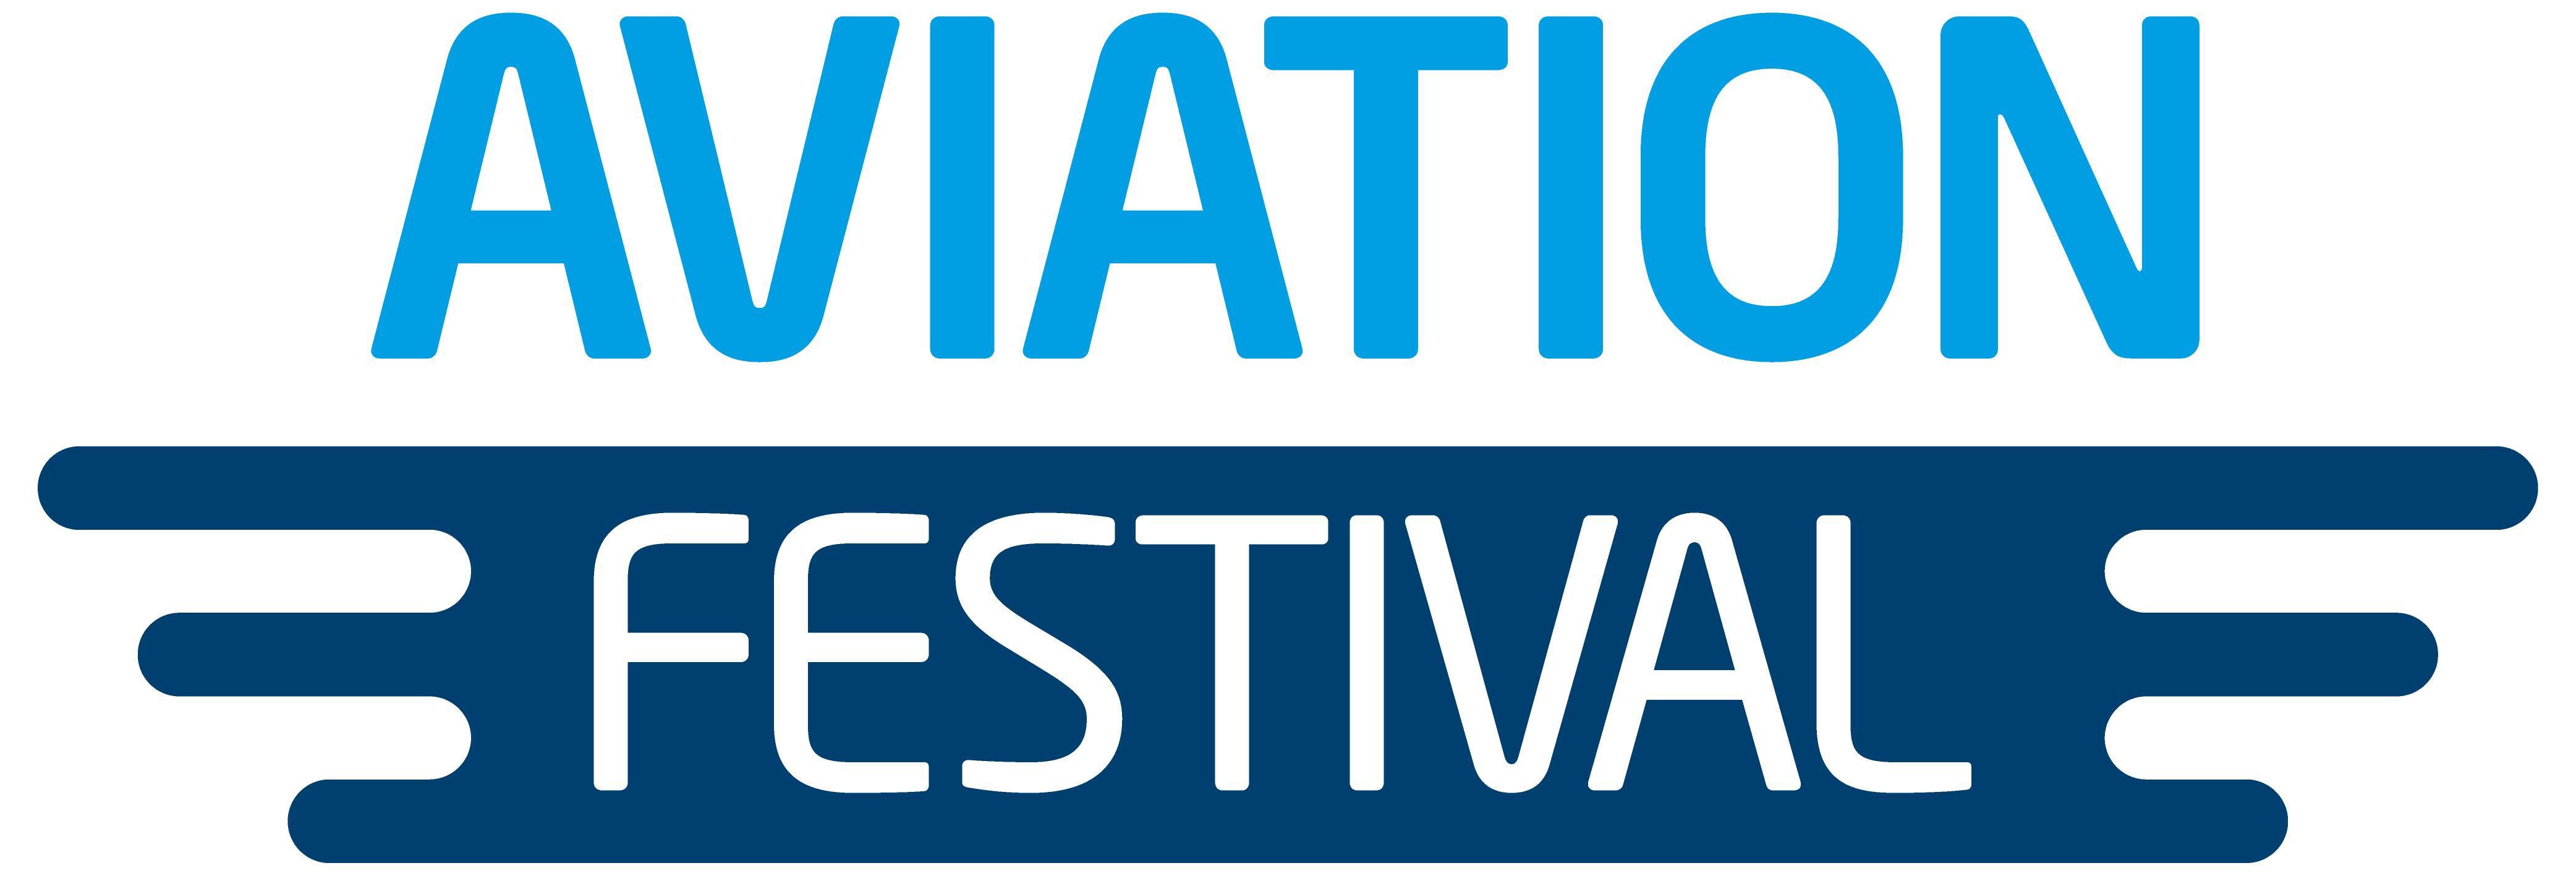 aviation-festival-2016